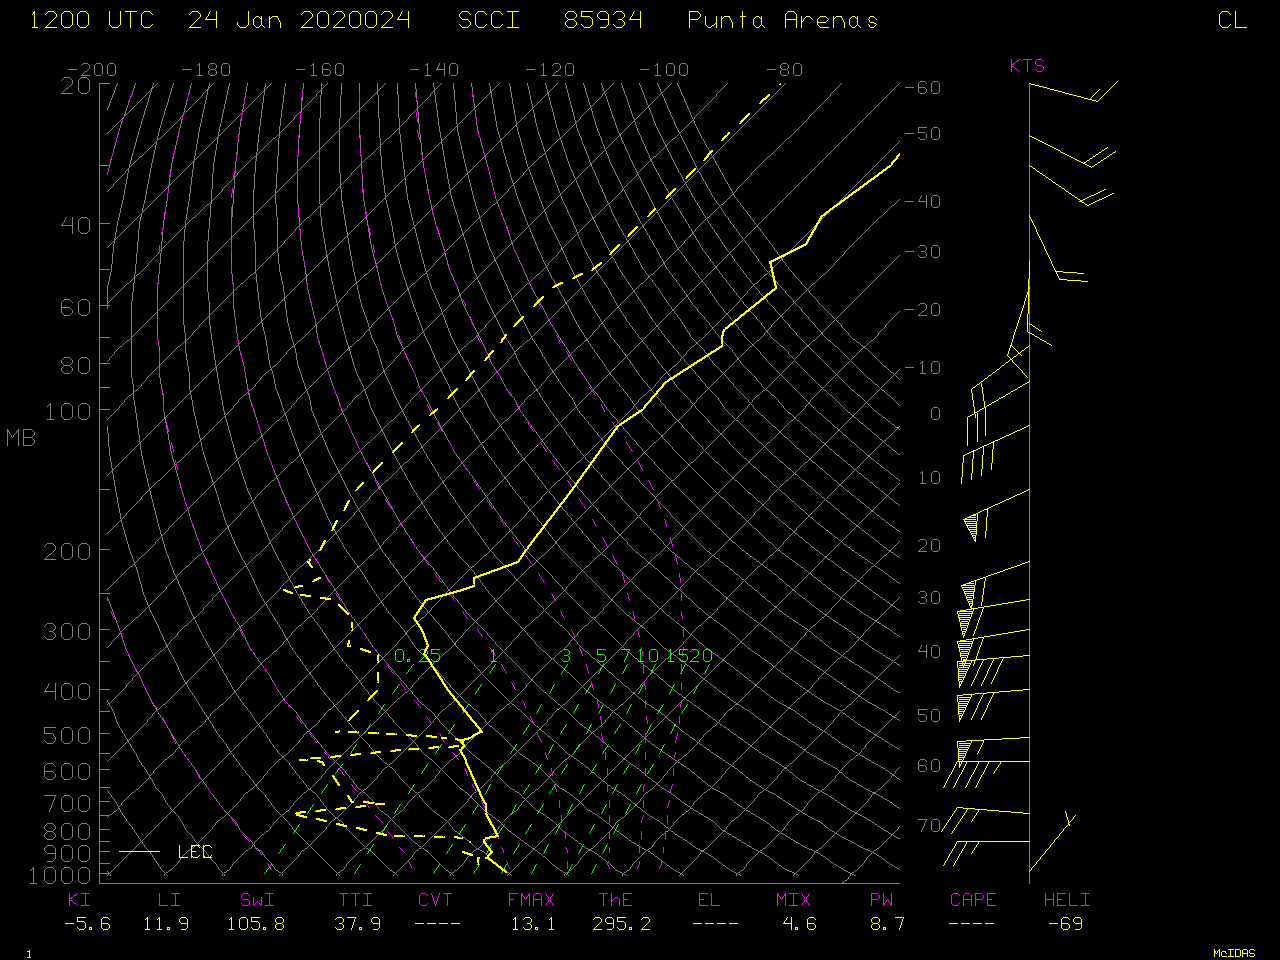 Plot of rawinsonde data from Punta Arenas, Chile at 12 UTC on 24 January [click to enlarge]